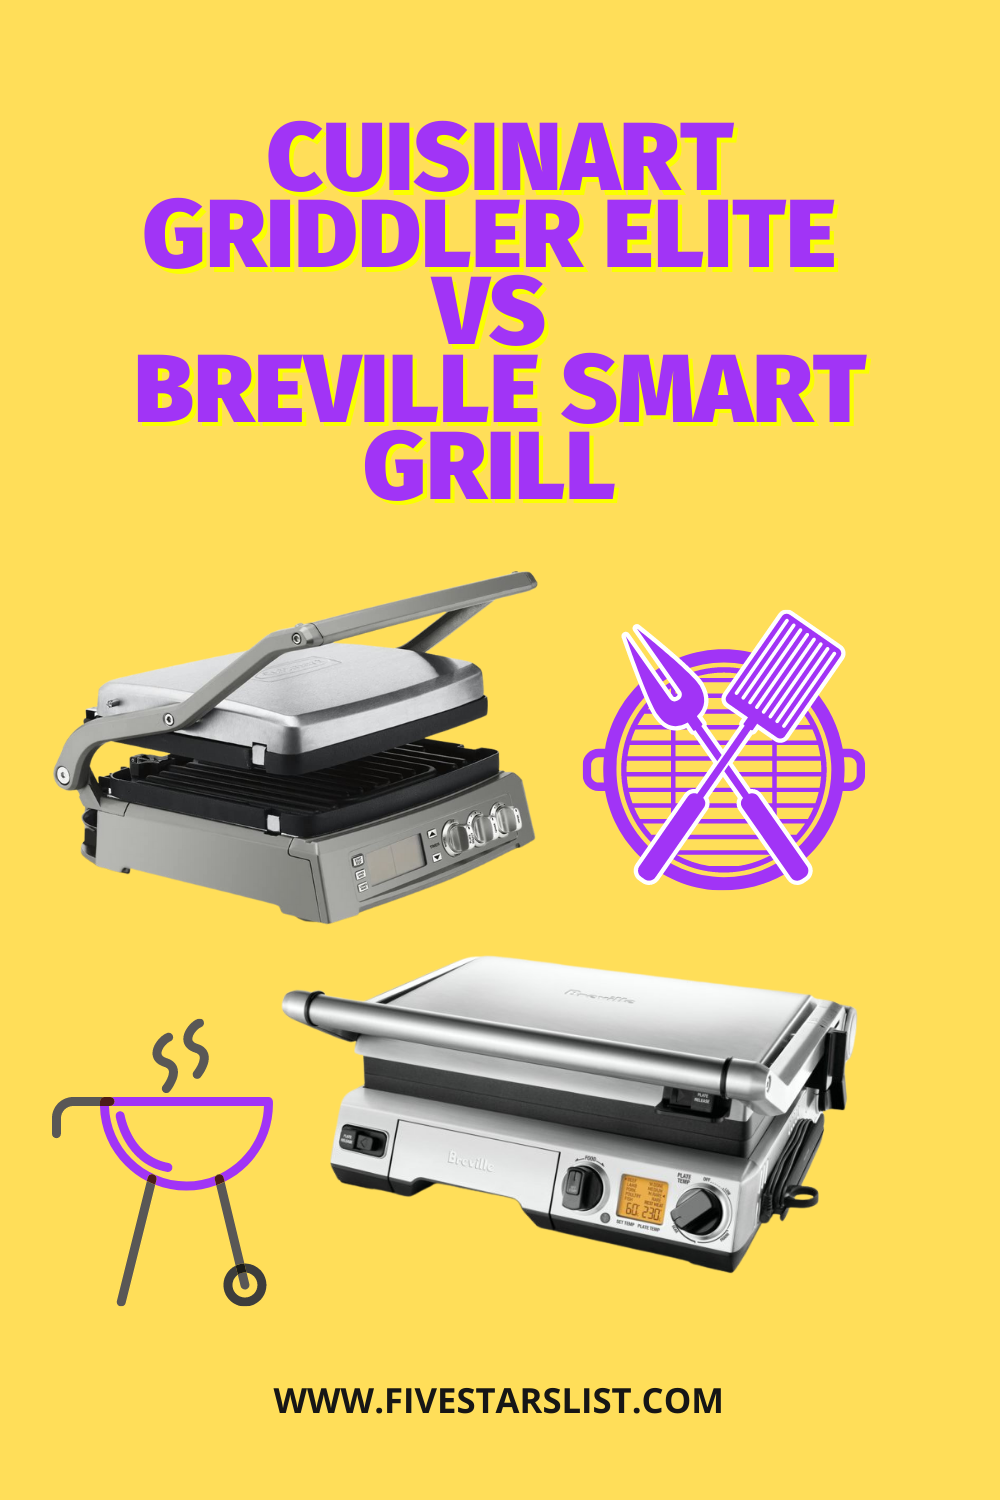 Cuisinart Griddler Elite vs Breville Smart Grill 